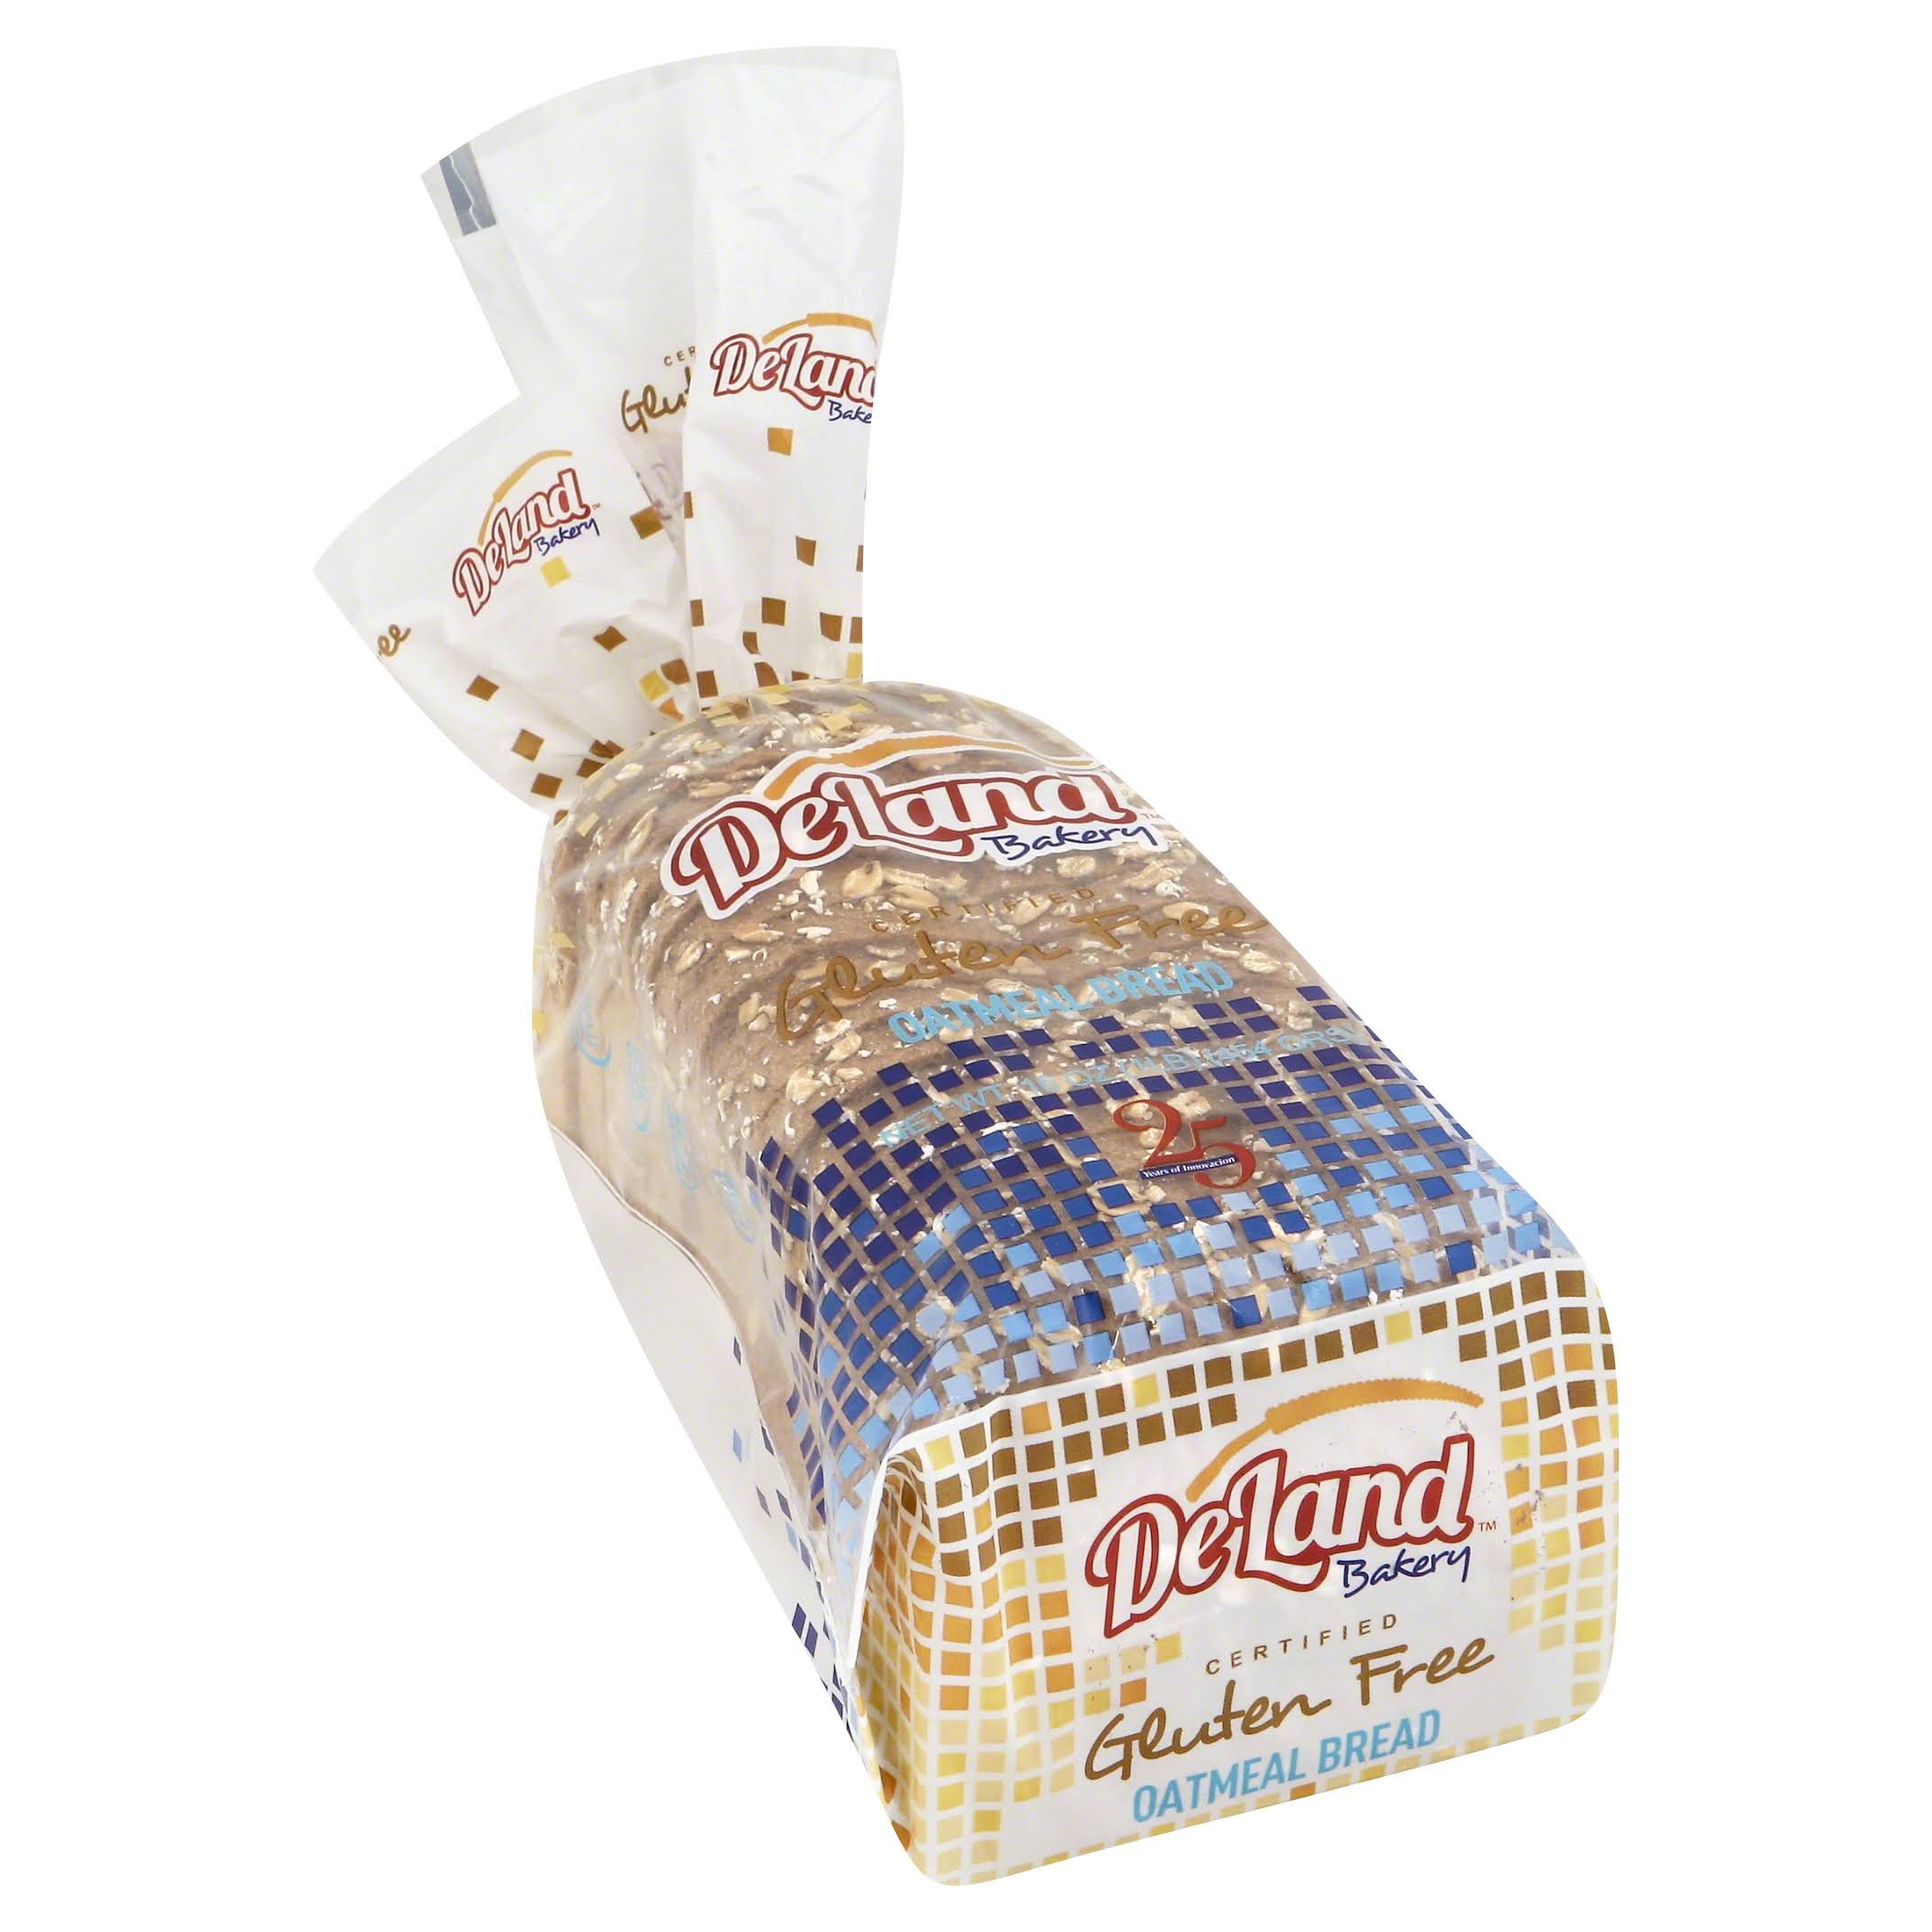 DeLand All Natural Oatmeal Bread - 16oz